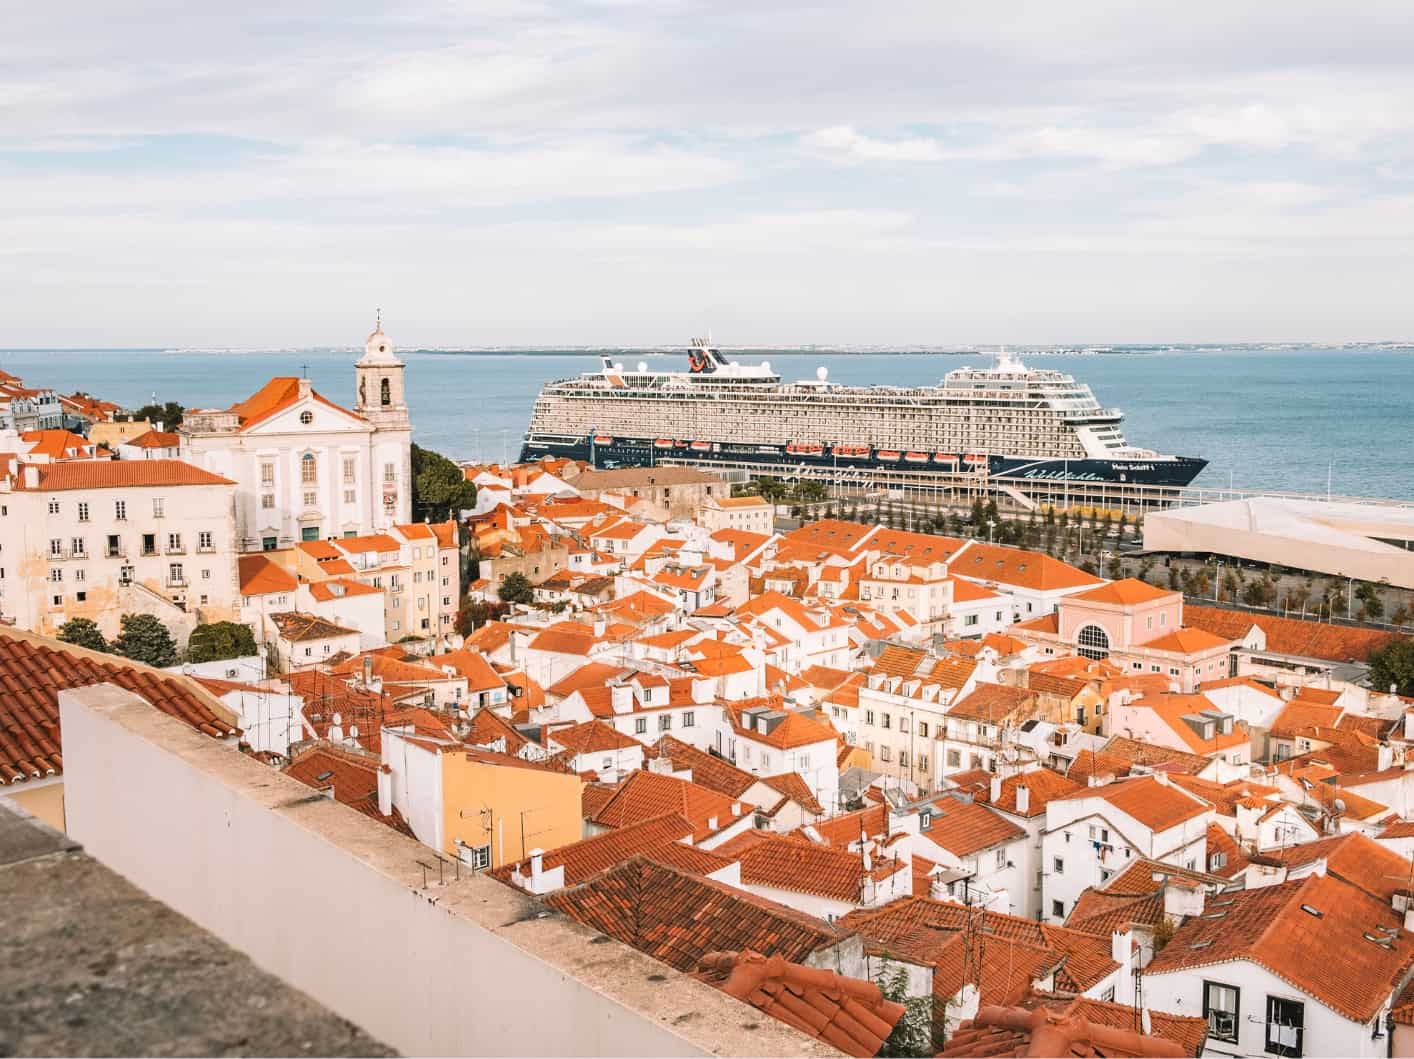 Miradouro de Santa Luzia: Some of the Best Views in Lisbon